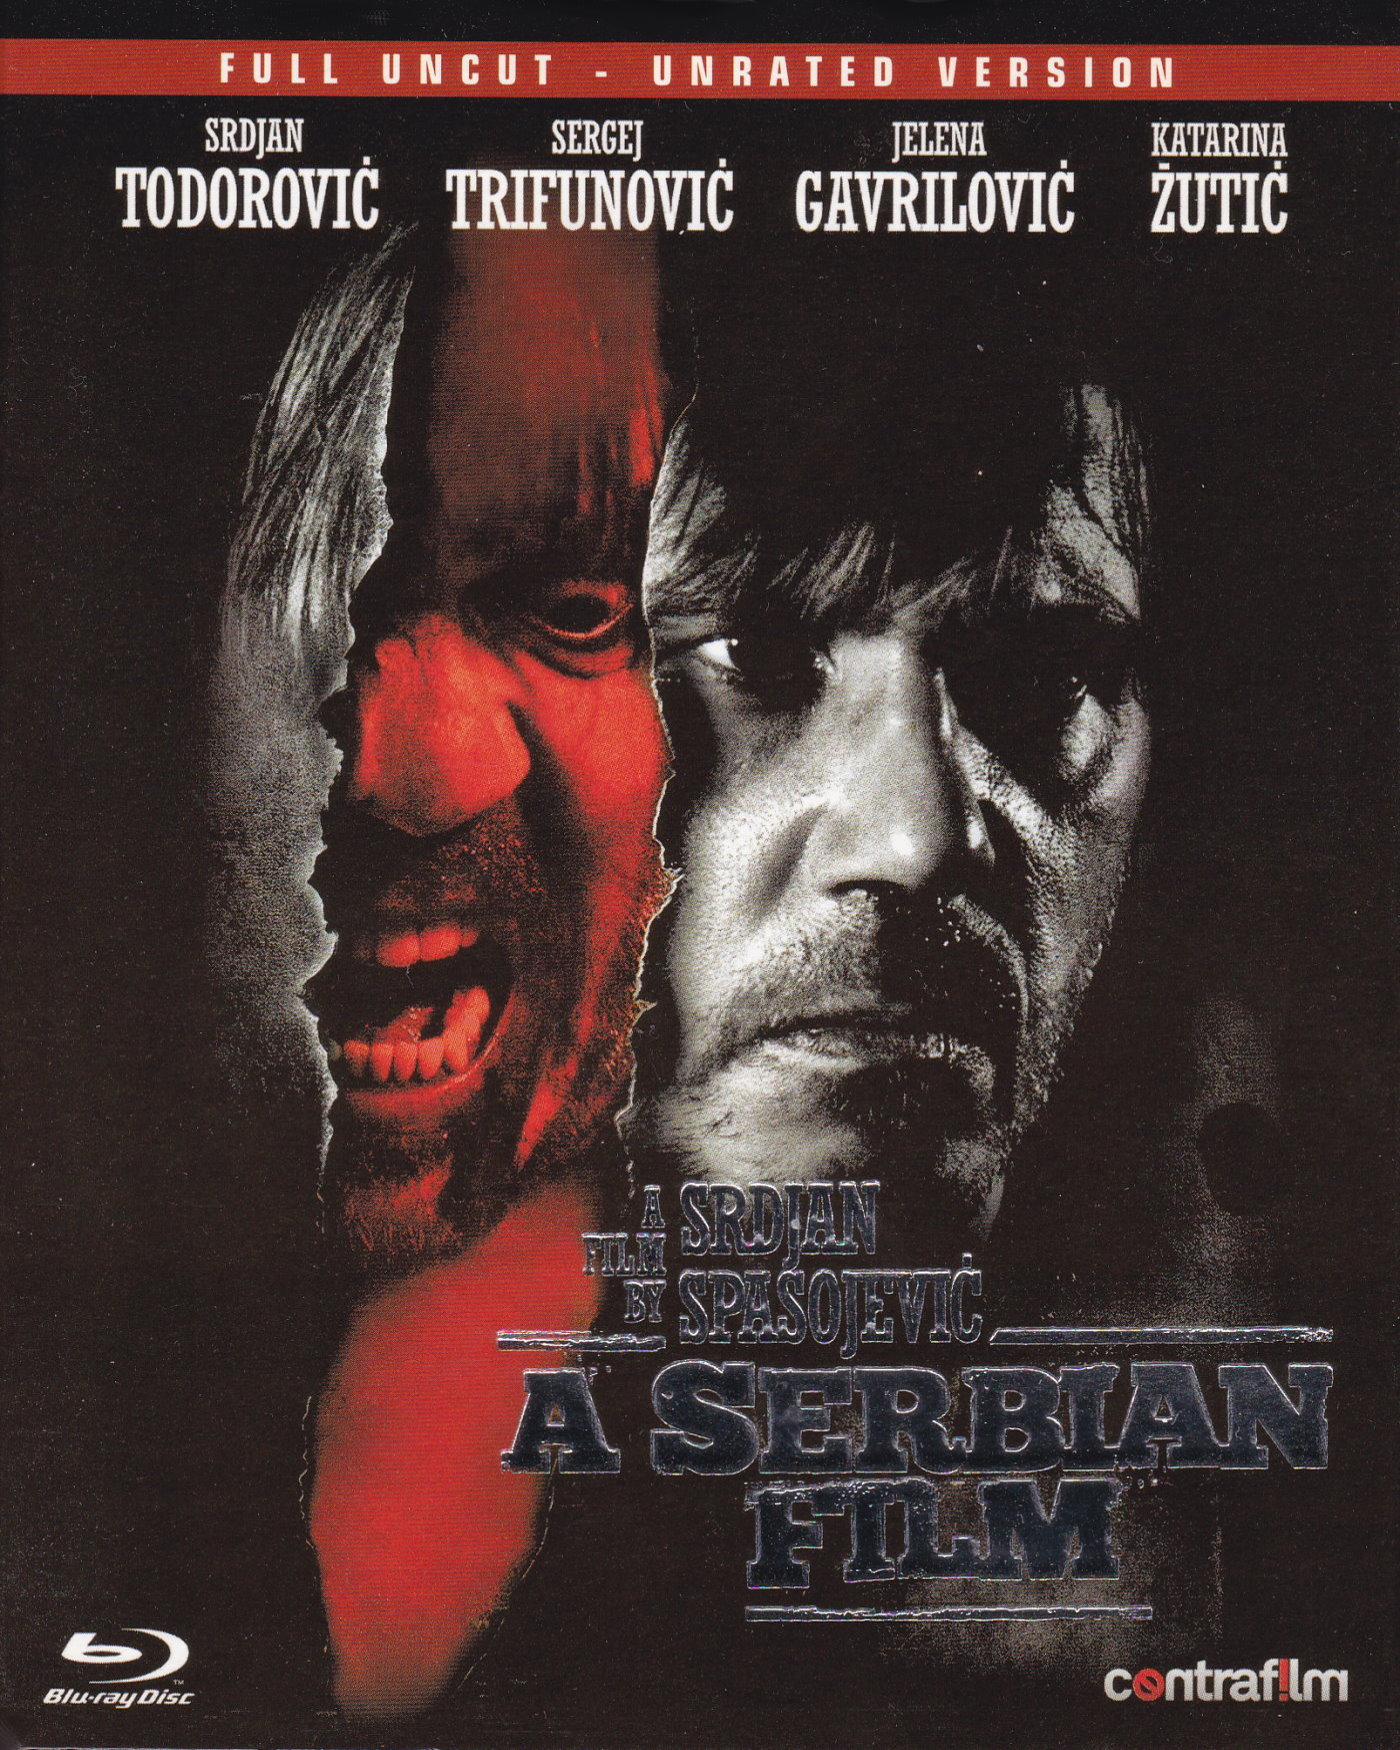 Cover - A Serbian Film.jpg